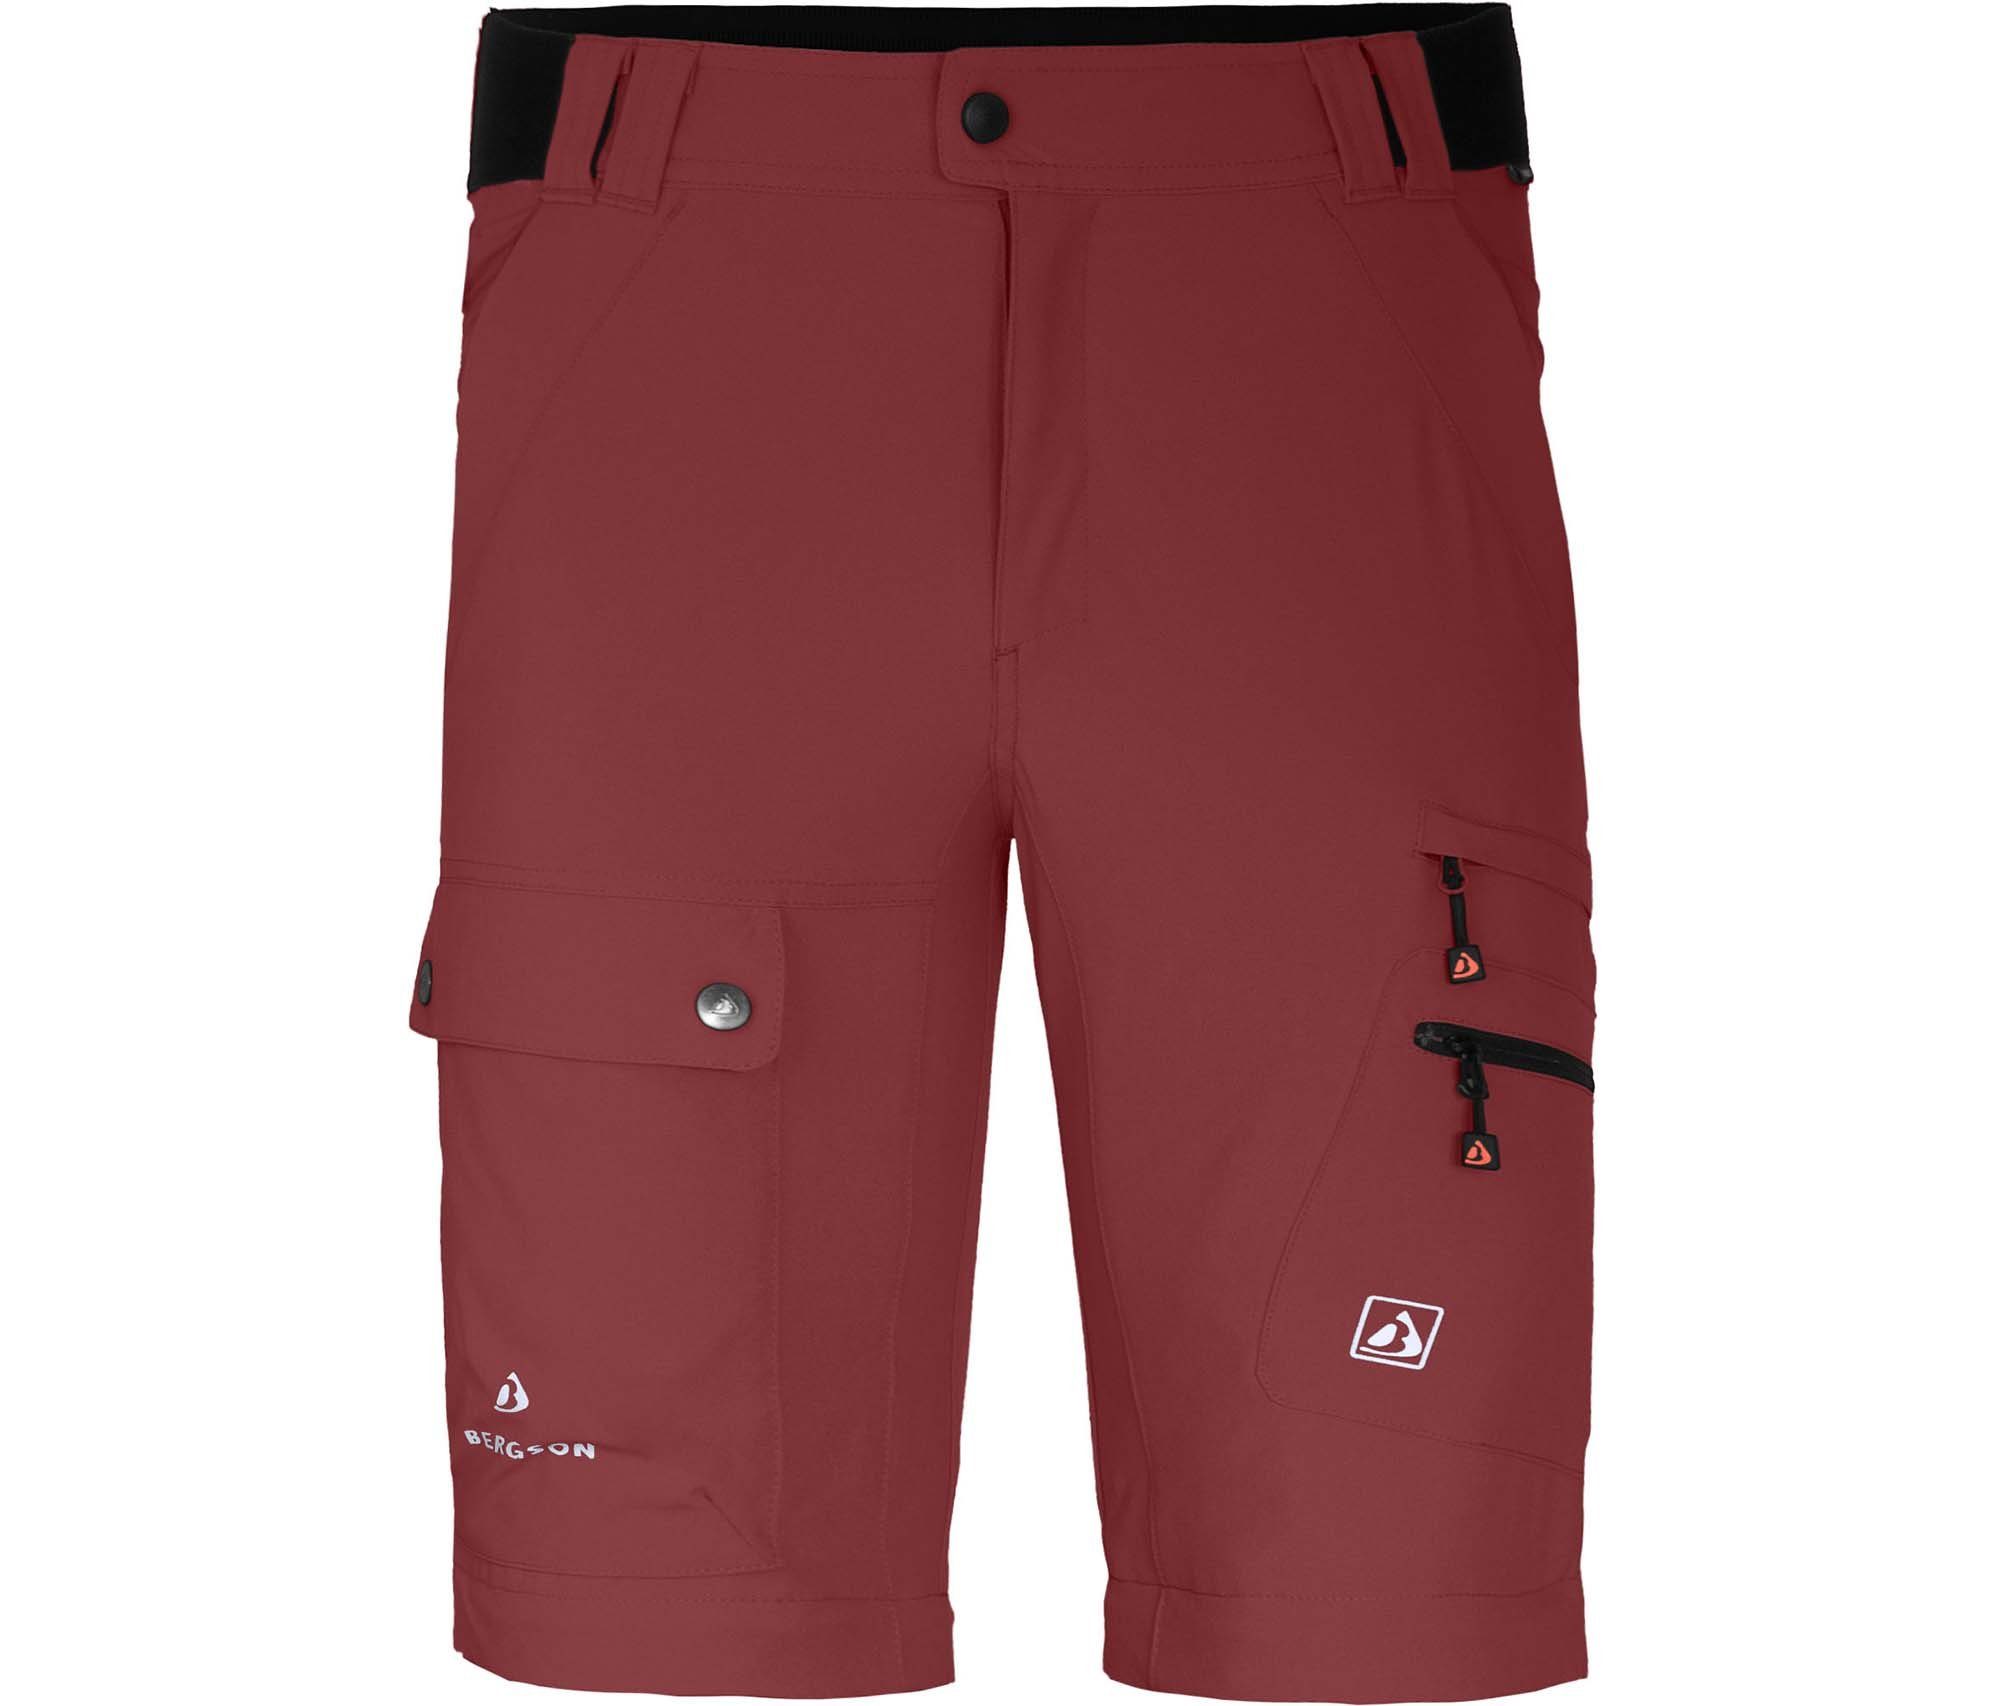 Bergson Zip-off-Hose Wanderhose, 8 recycelt, rot FROSLEV Taschen, Herren elastisch, Bermuda braun Zipp-Off Normalgrößen